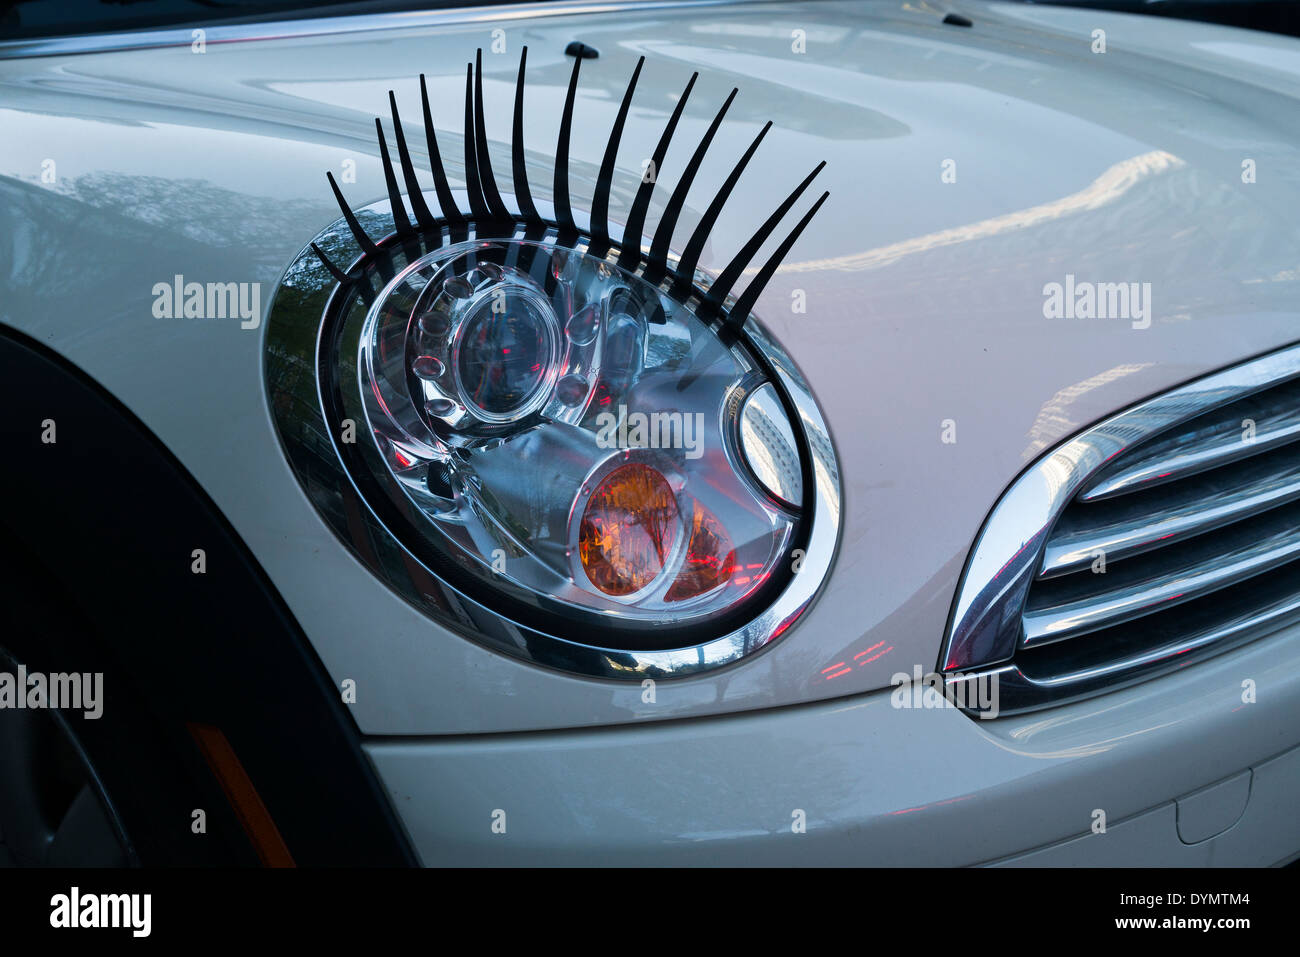 Autoscheinwerfer mit Wimpern Stockfotografie - Alamy